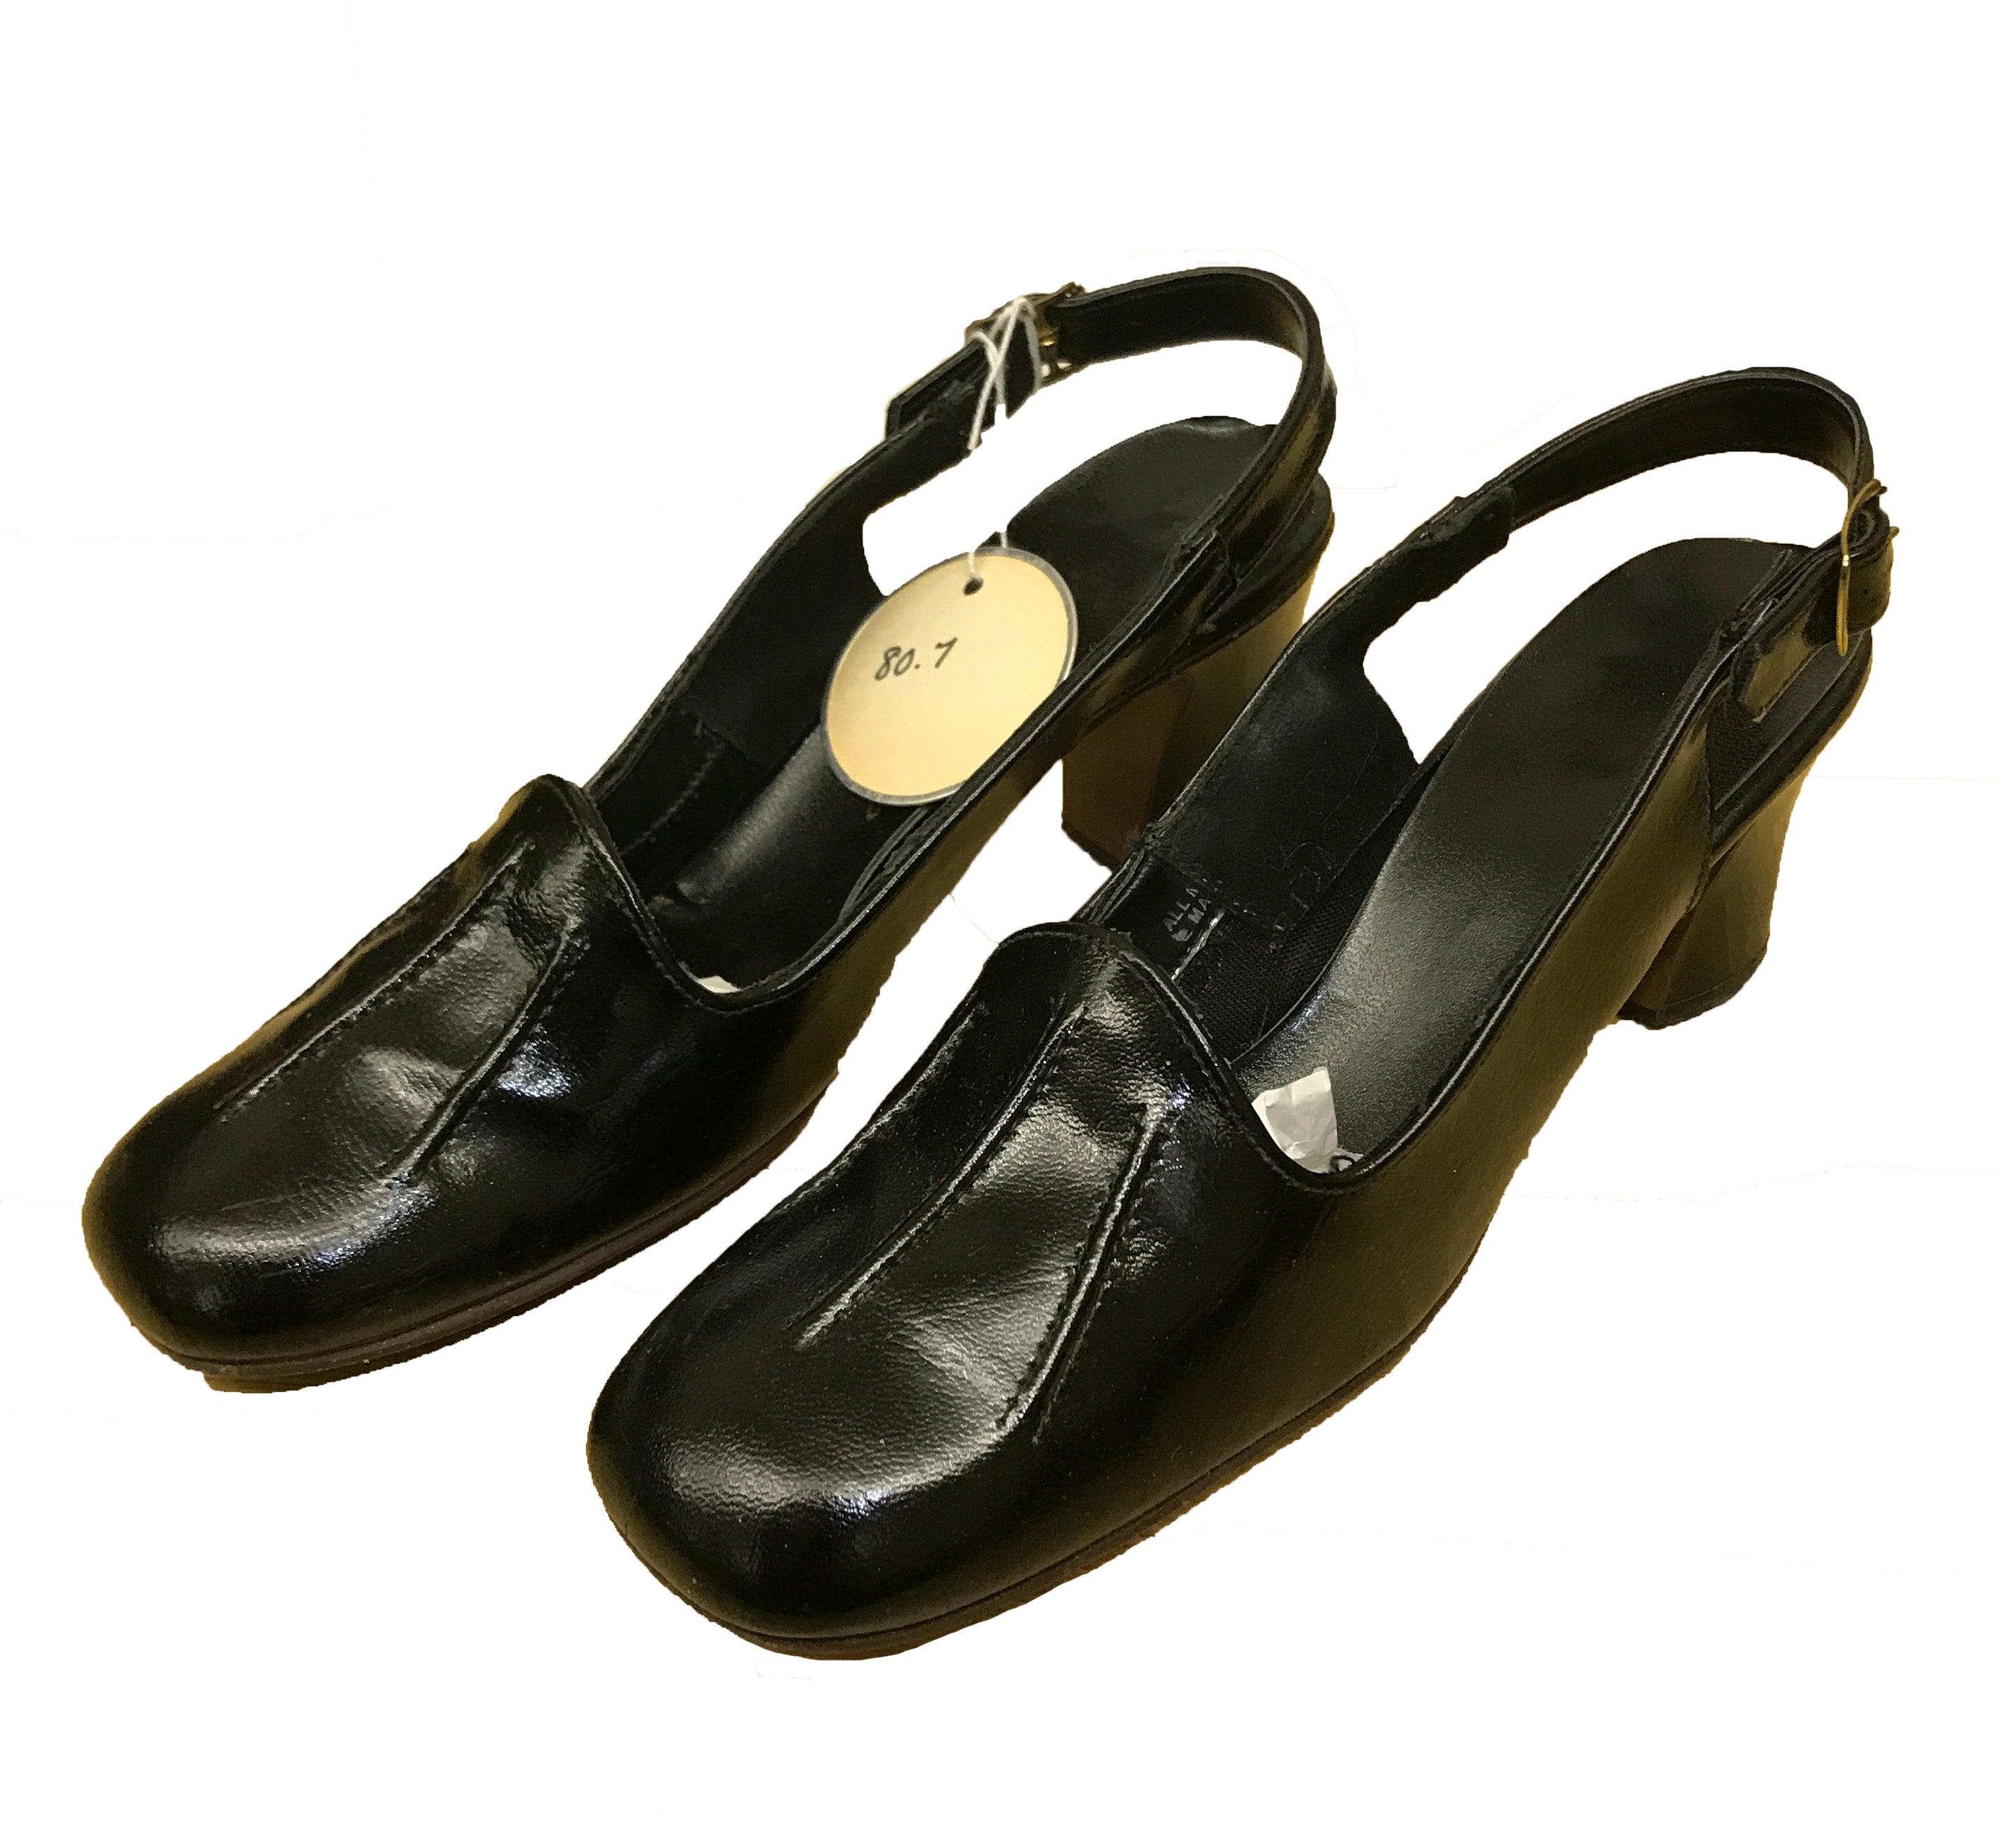 Vintage L.G. Haig Black Heels Women's Size 6.5